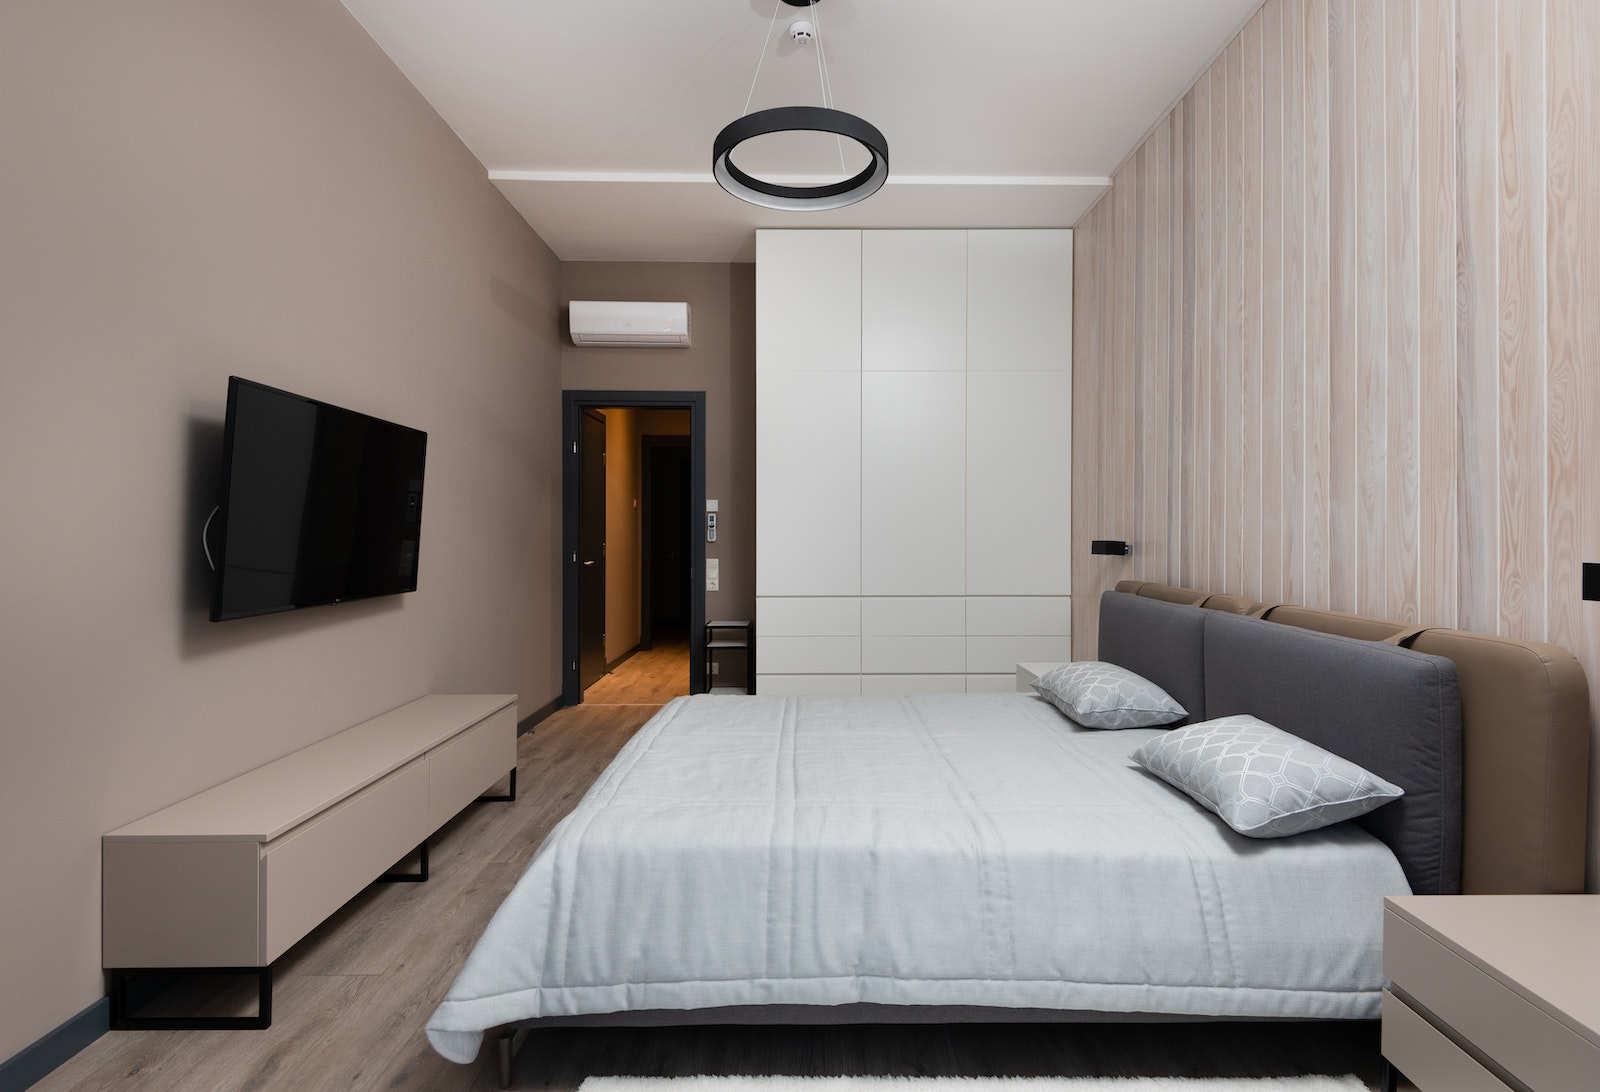 Modern bedroom interior with minimalist furniture and wooden parquet